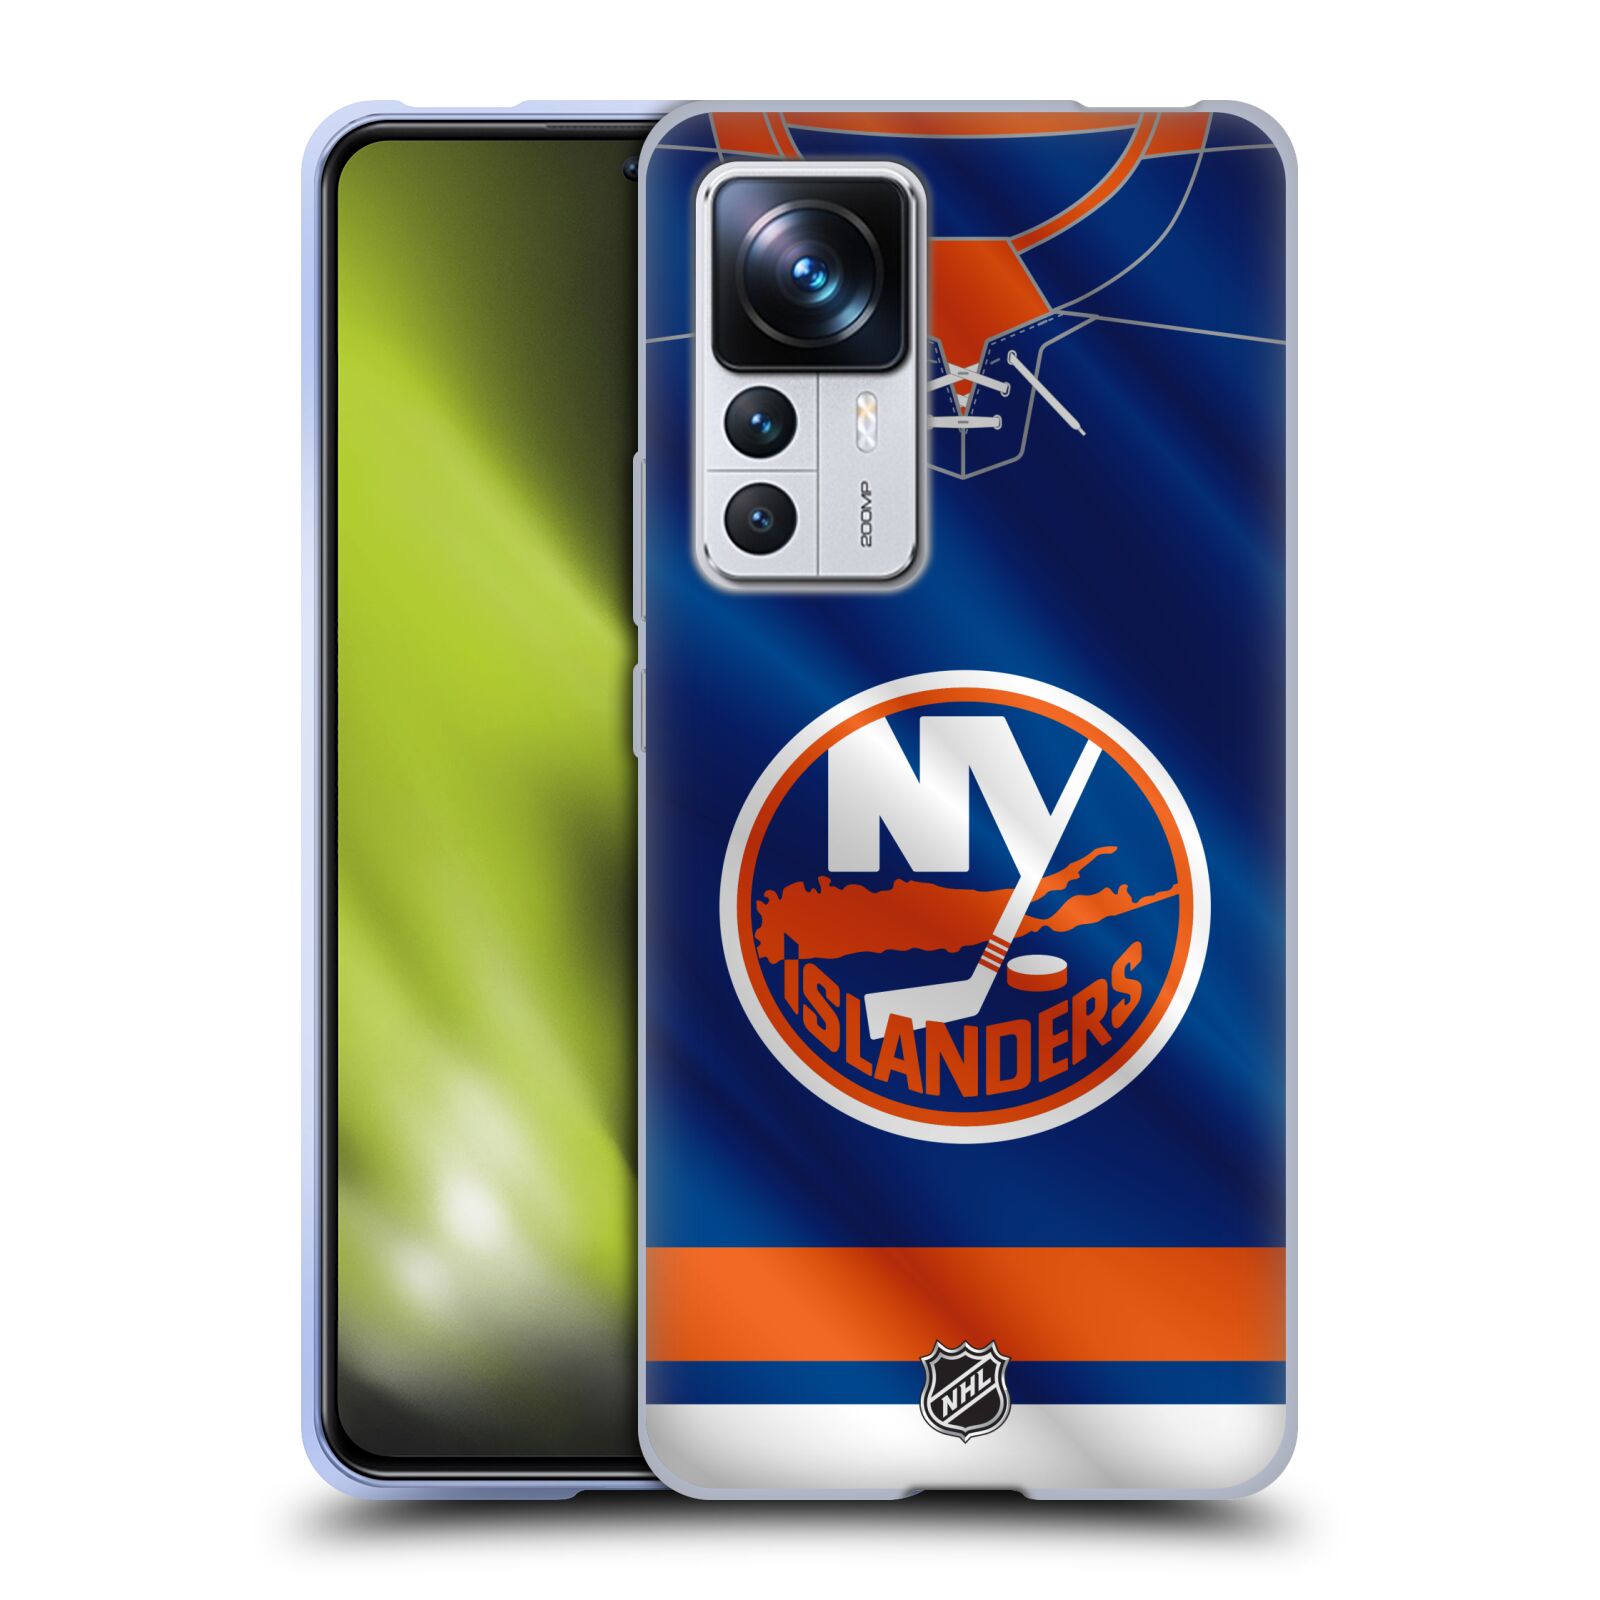 Silikonové pouzdro na mobil Xiaomi 12T / 12T Pro - NHL - Dres New York Islanders (Silikonový kryt, obal, pouzdro na mobilní telefon Xiaomi 12T / 12T Pro s licencovaným motivem NHL - Dres New York Islanders)